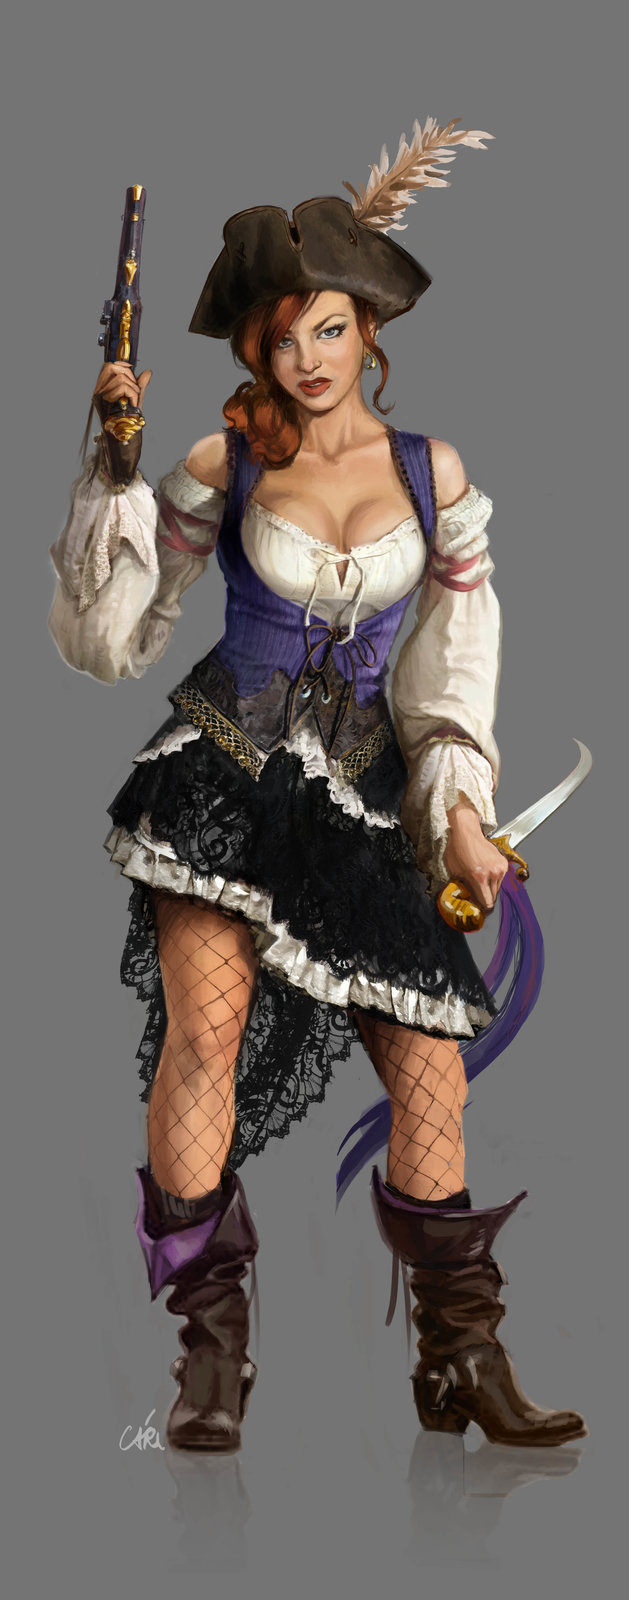 Concept Art of a Female Pirate